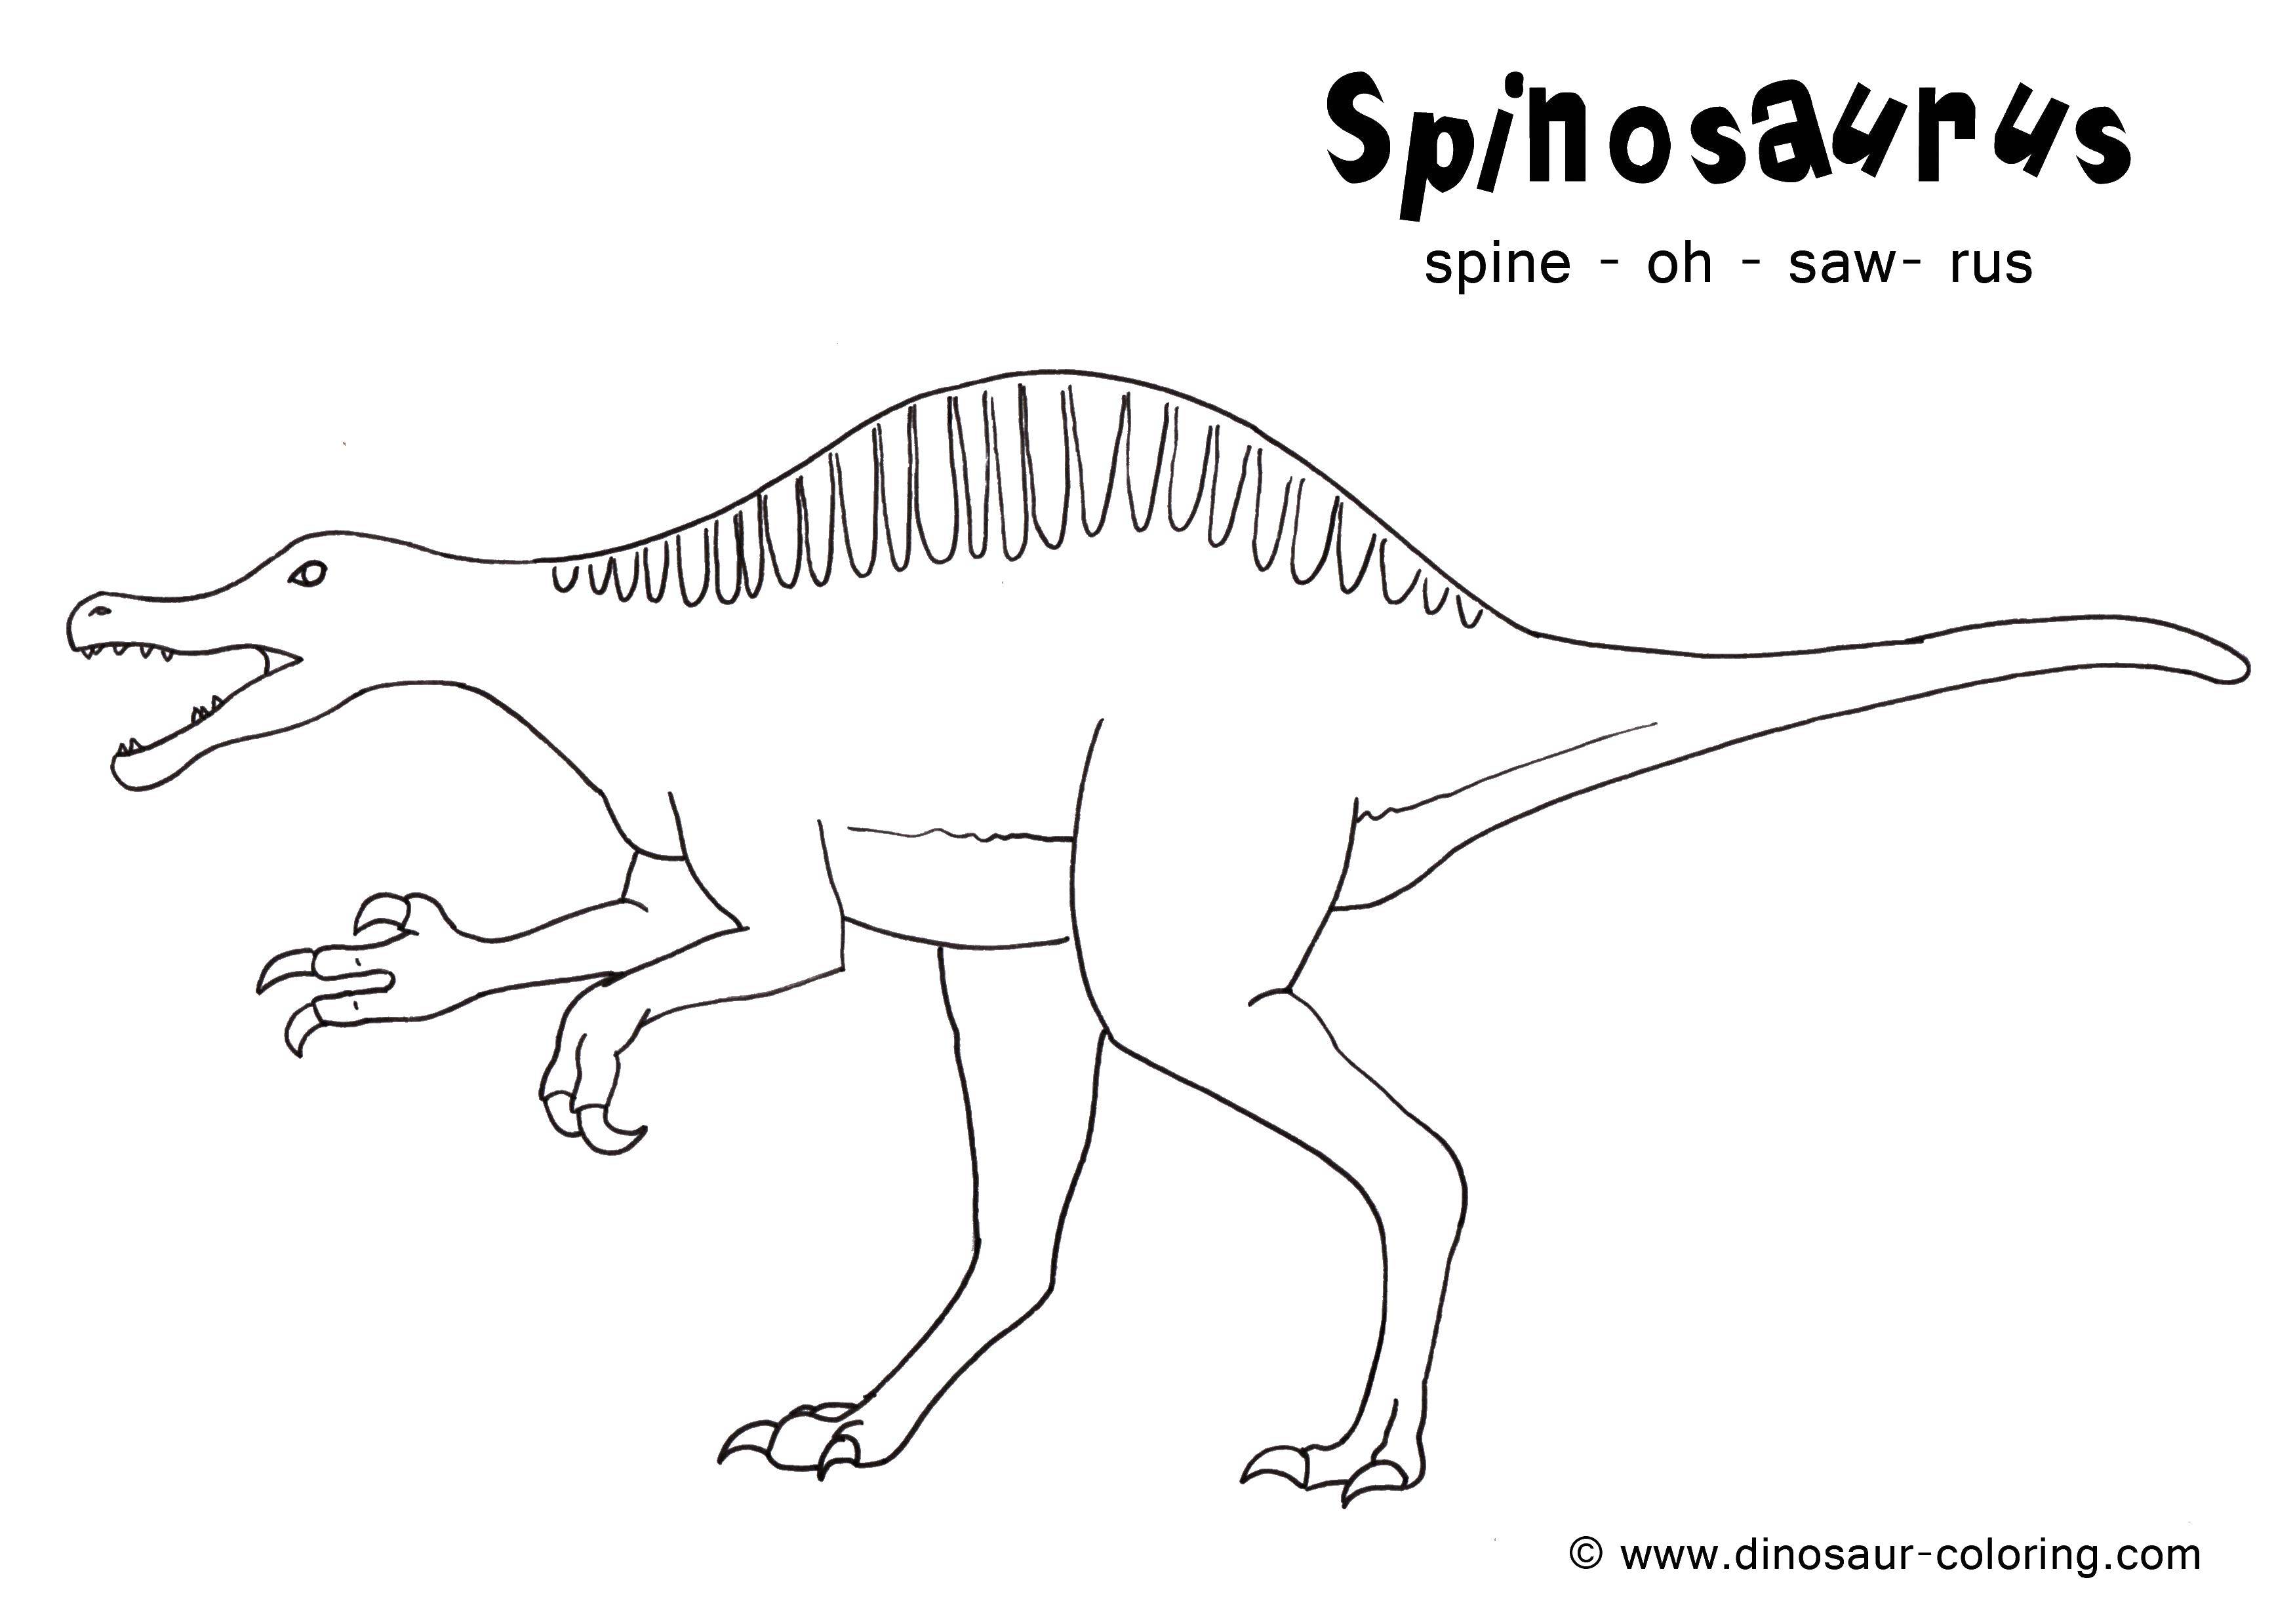 Coloring Spinosaurus. Category dinosaur. Tags:  spinosaurus.